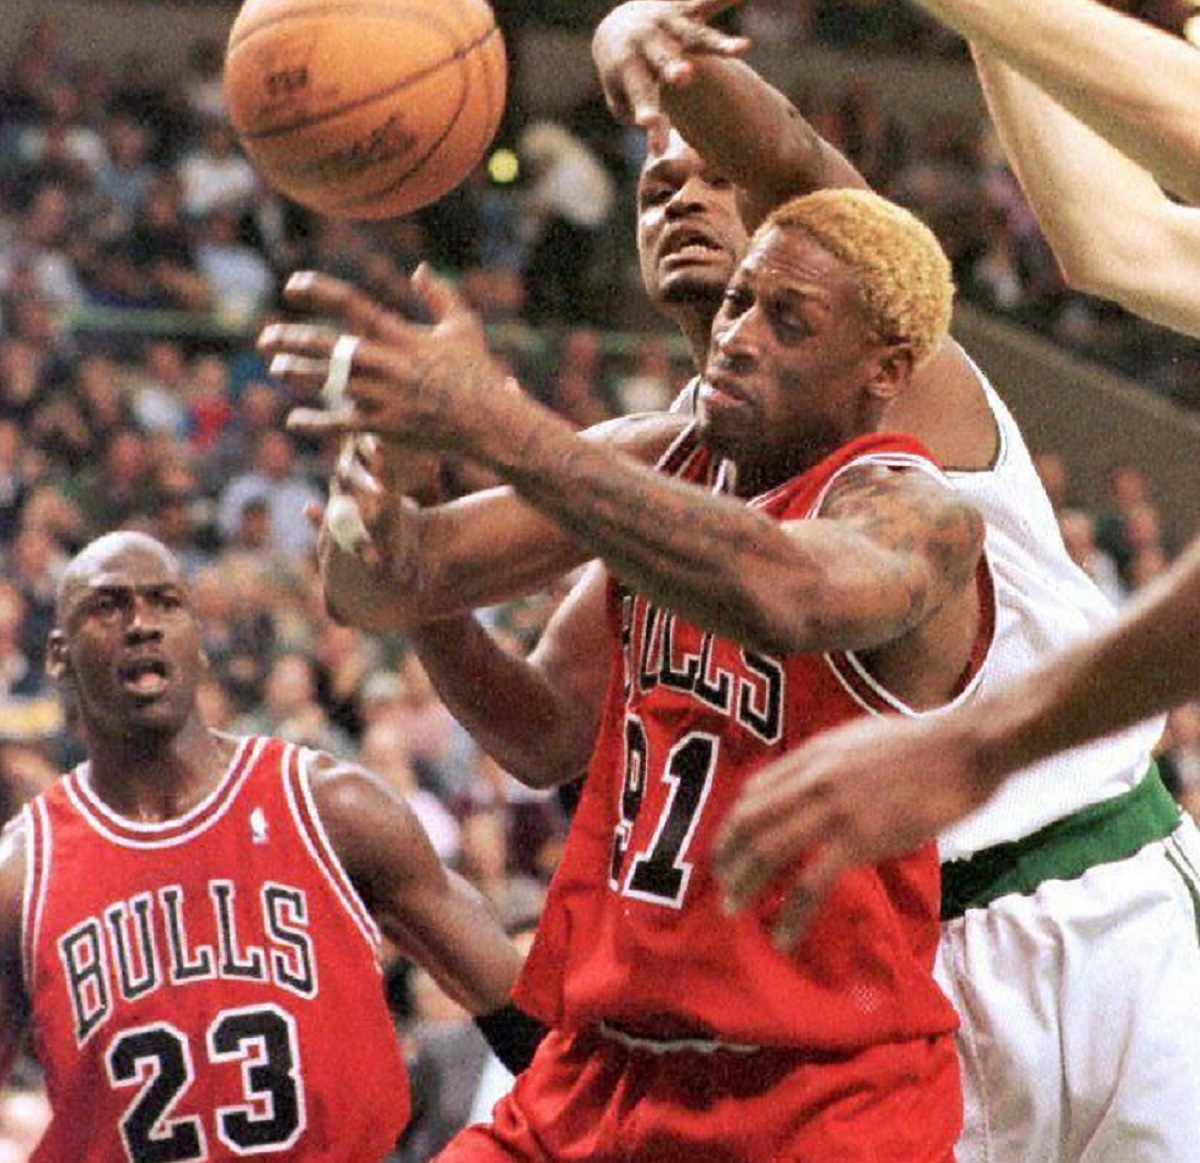 Chicago Bulls vs Boston Celtics on October 31, 1997